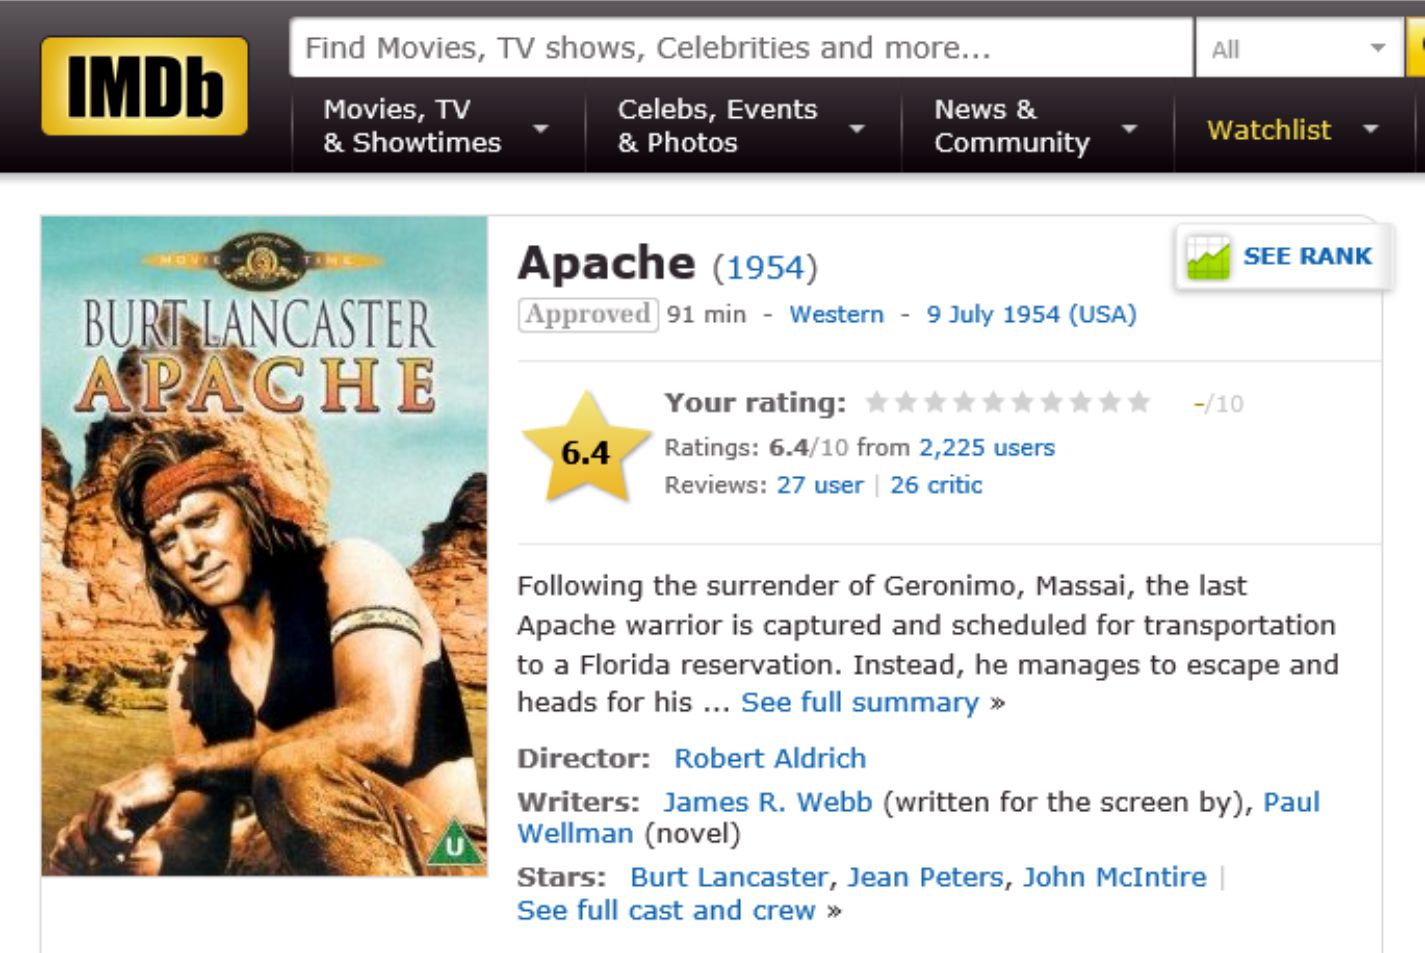 APACHE IMDB